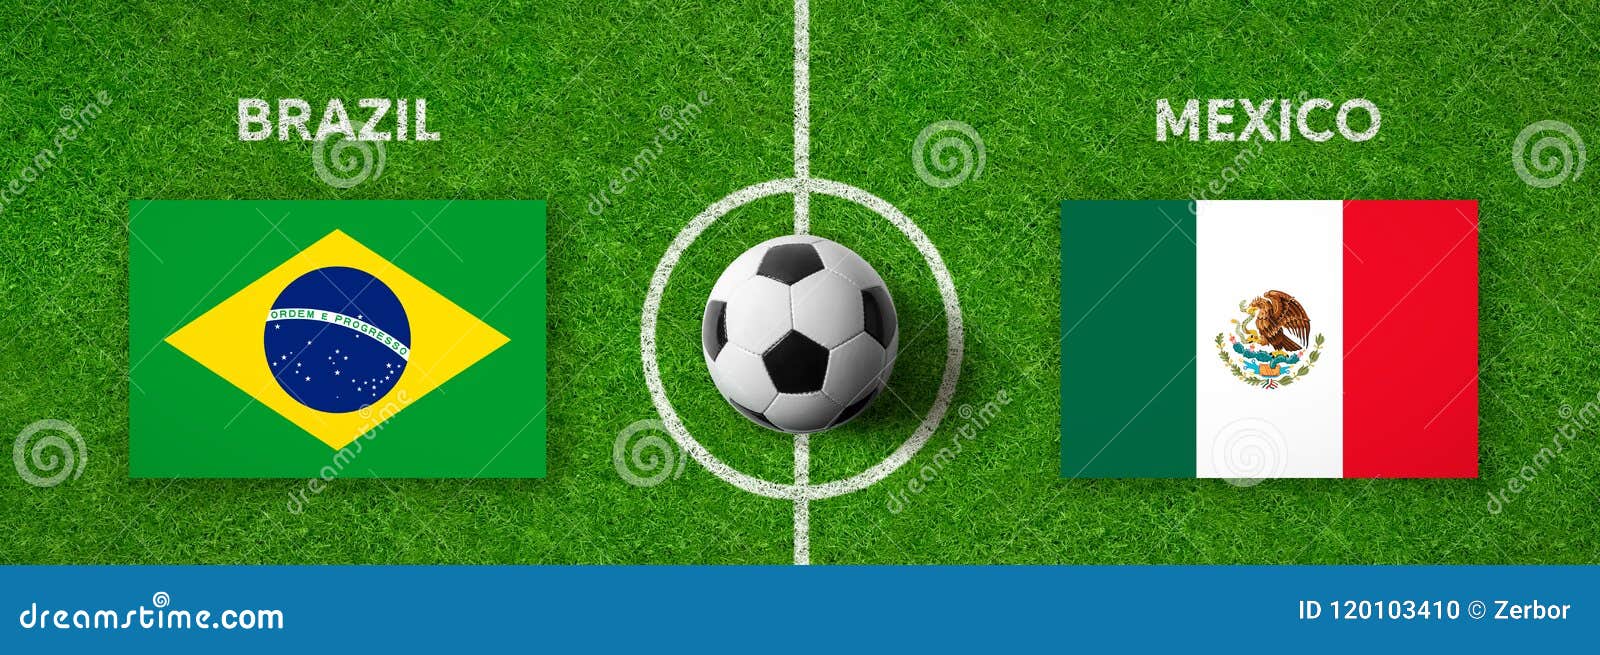 Football Match Brazil Vs. Mexico Stock Photo Image of nations